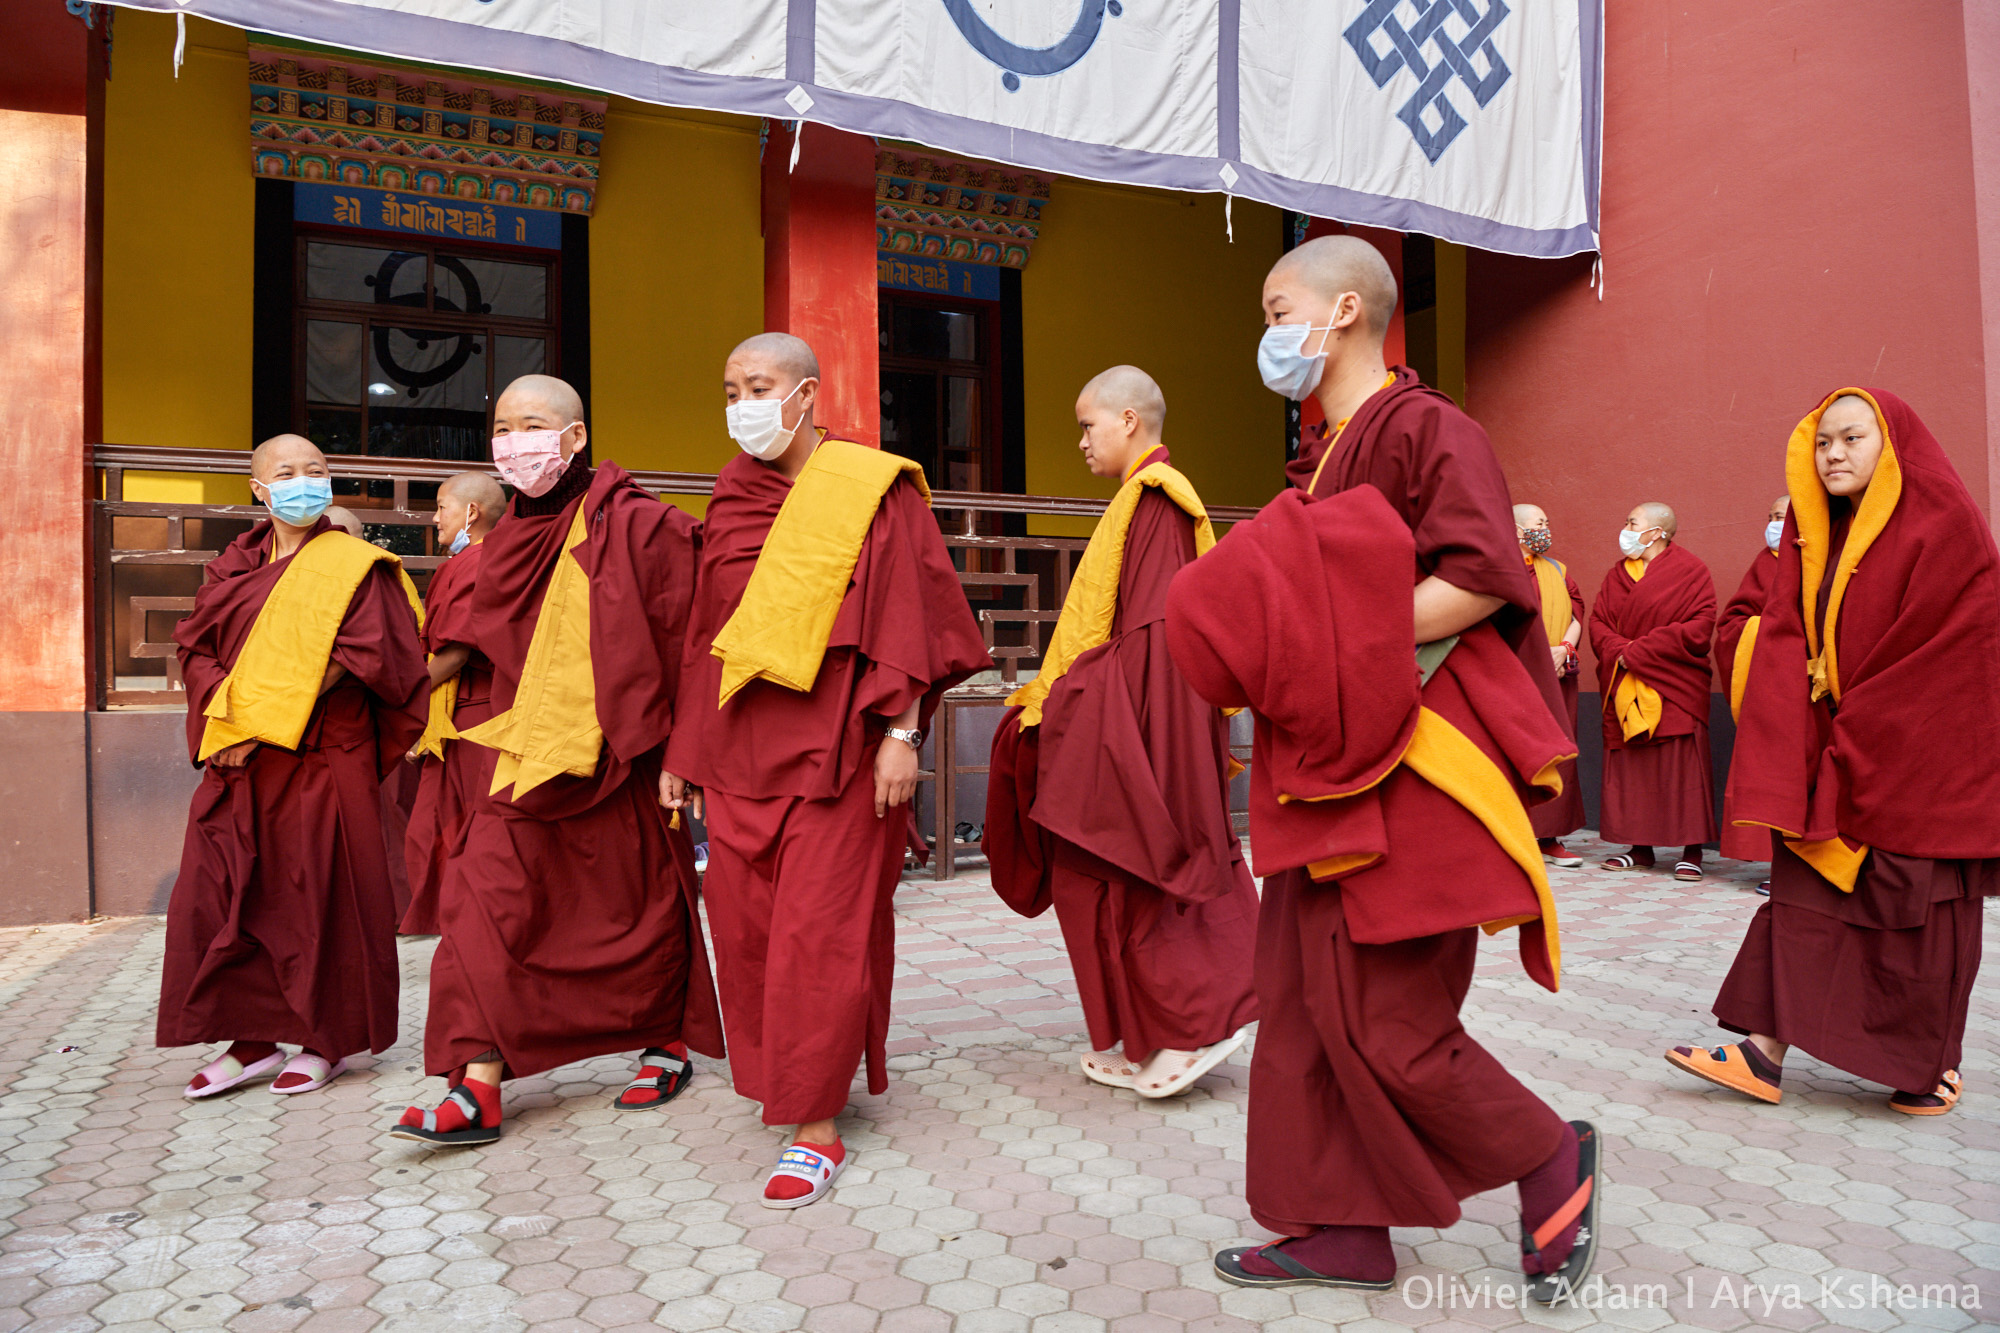 2020.02.13 H.E. Goshir Gyaltsab Rinpoche Presides over the Sixth Arya Kshema Opening Ceremony